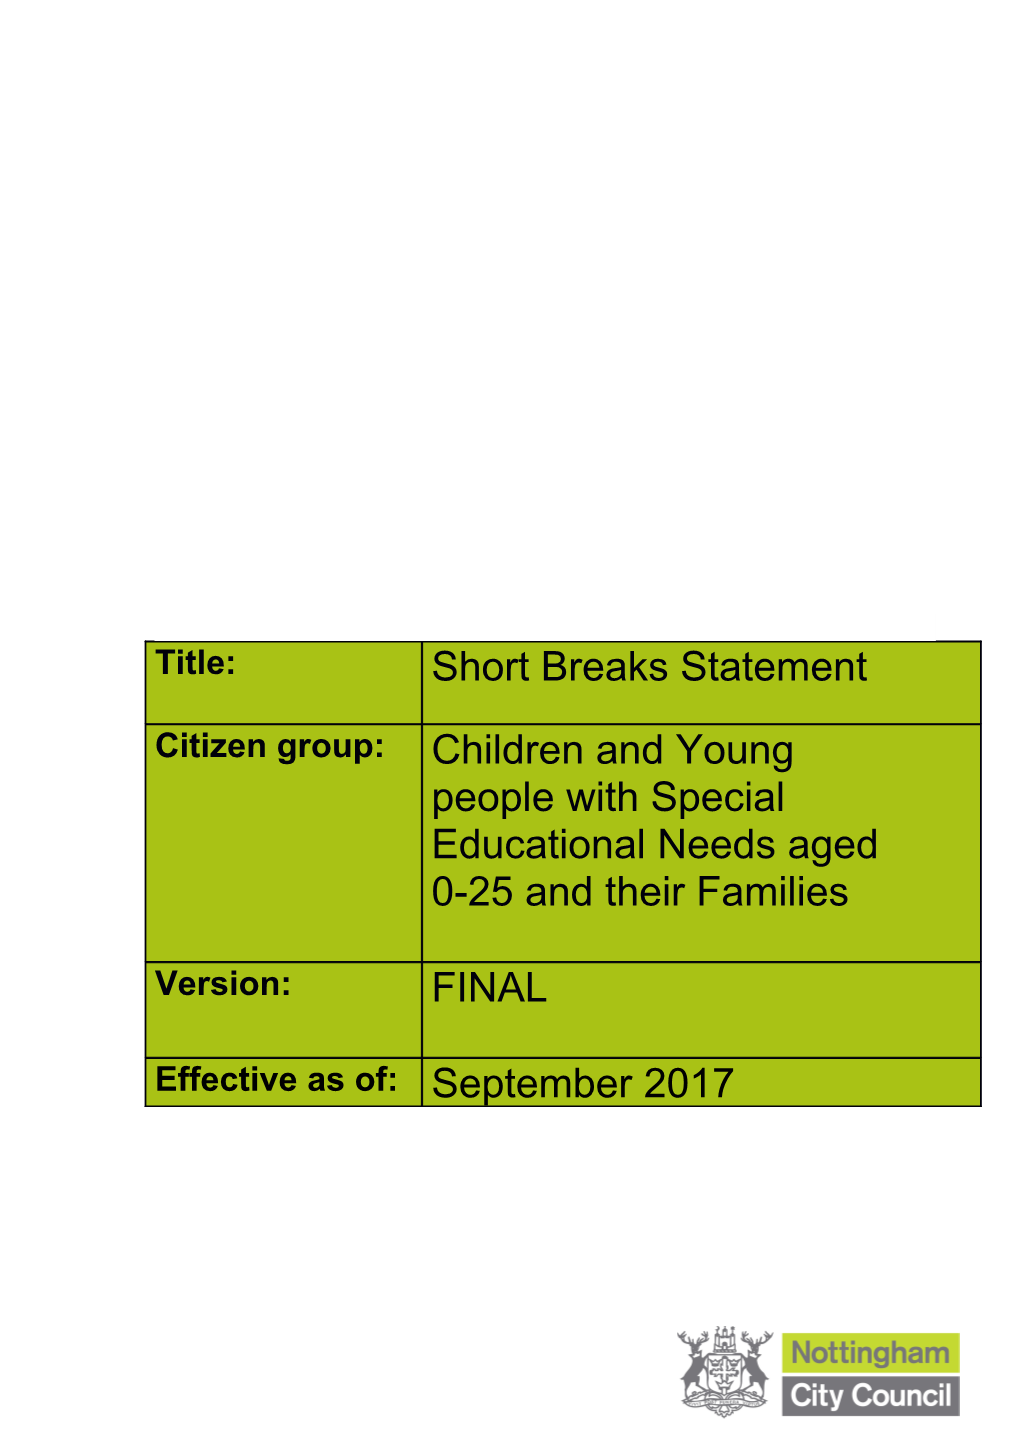 Model Short Breaks Services Information Statement